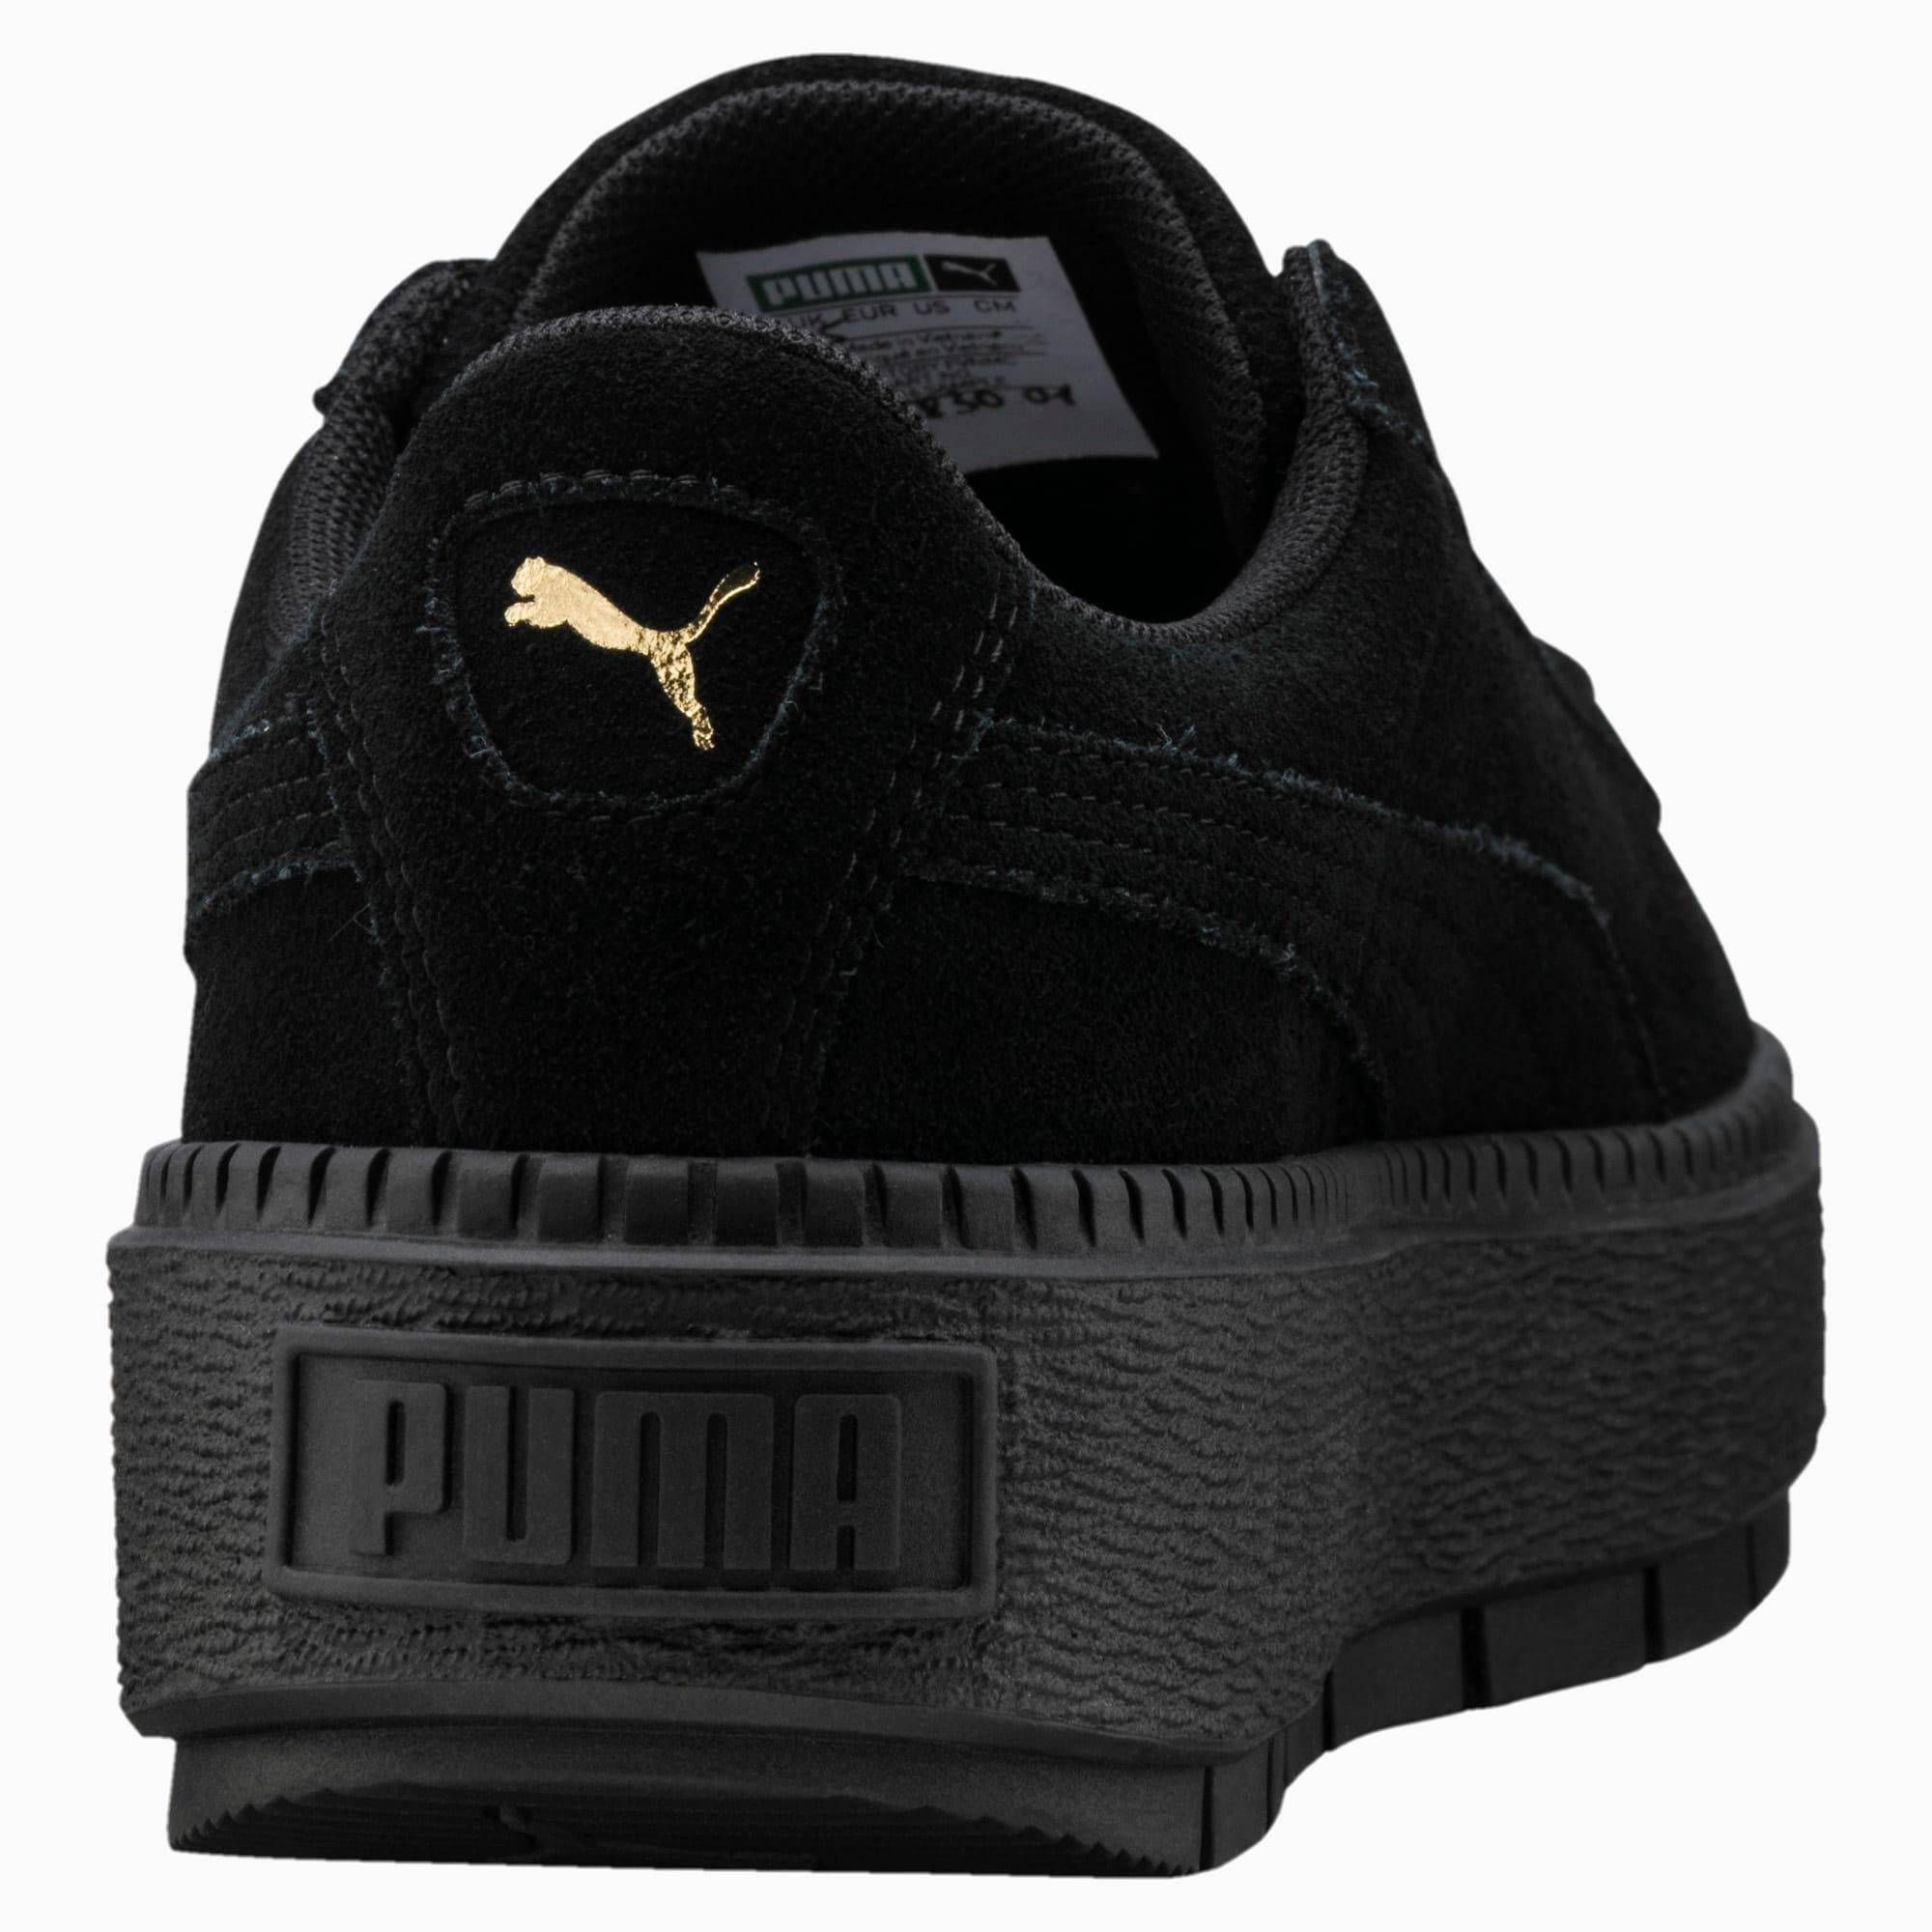 puma suede platform rugged sneaker